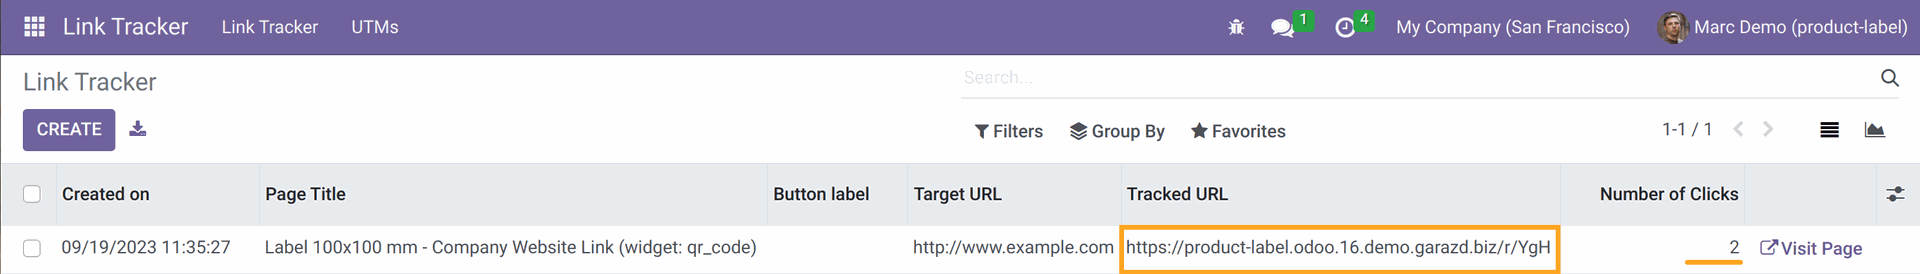 Odoo Product Label Link Tracker shorten URL in 16.0